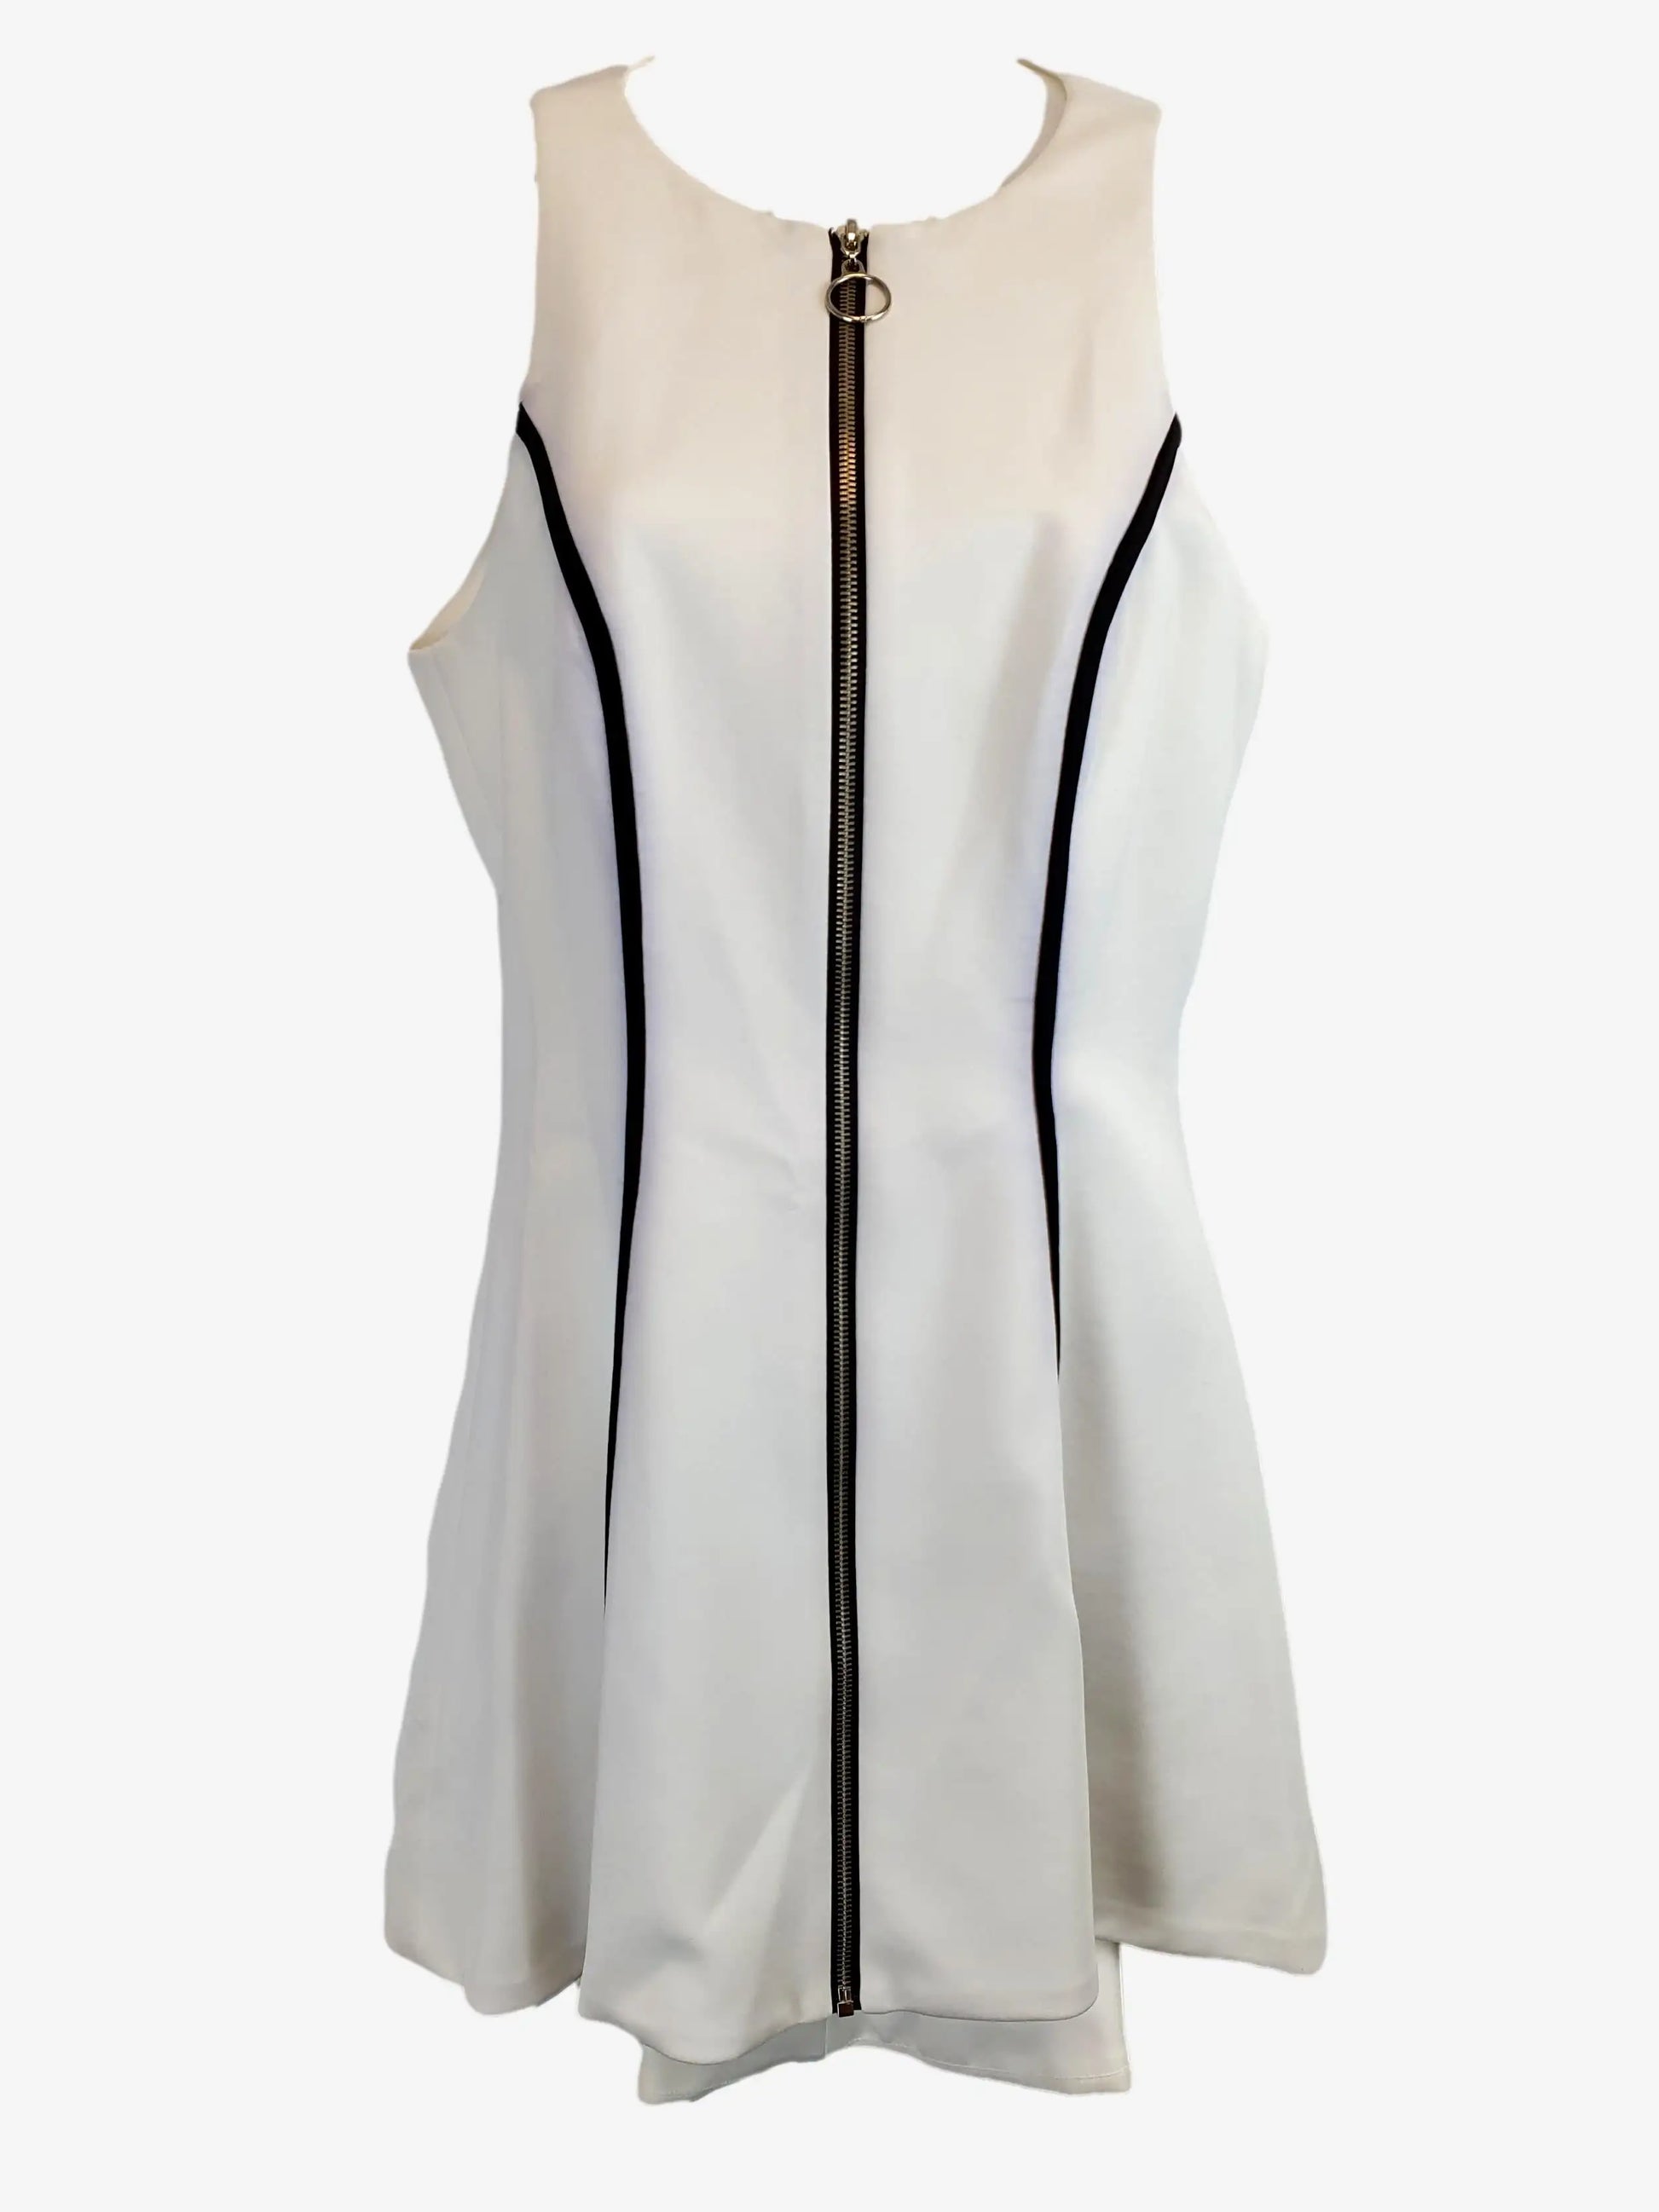 Watson x Watson Front Zip Midi Dress Size 8 by SwapUp-Second Hand Shop-Thrift Store-Op Shop 